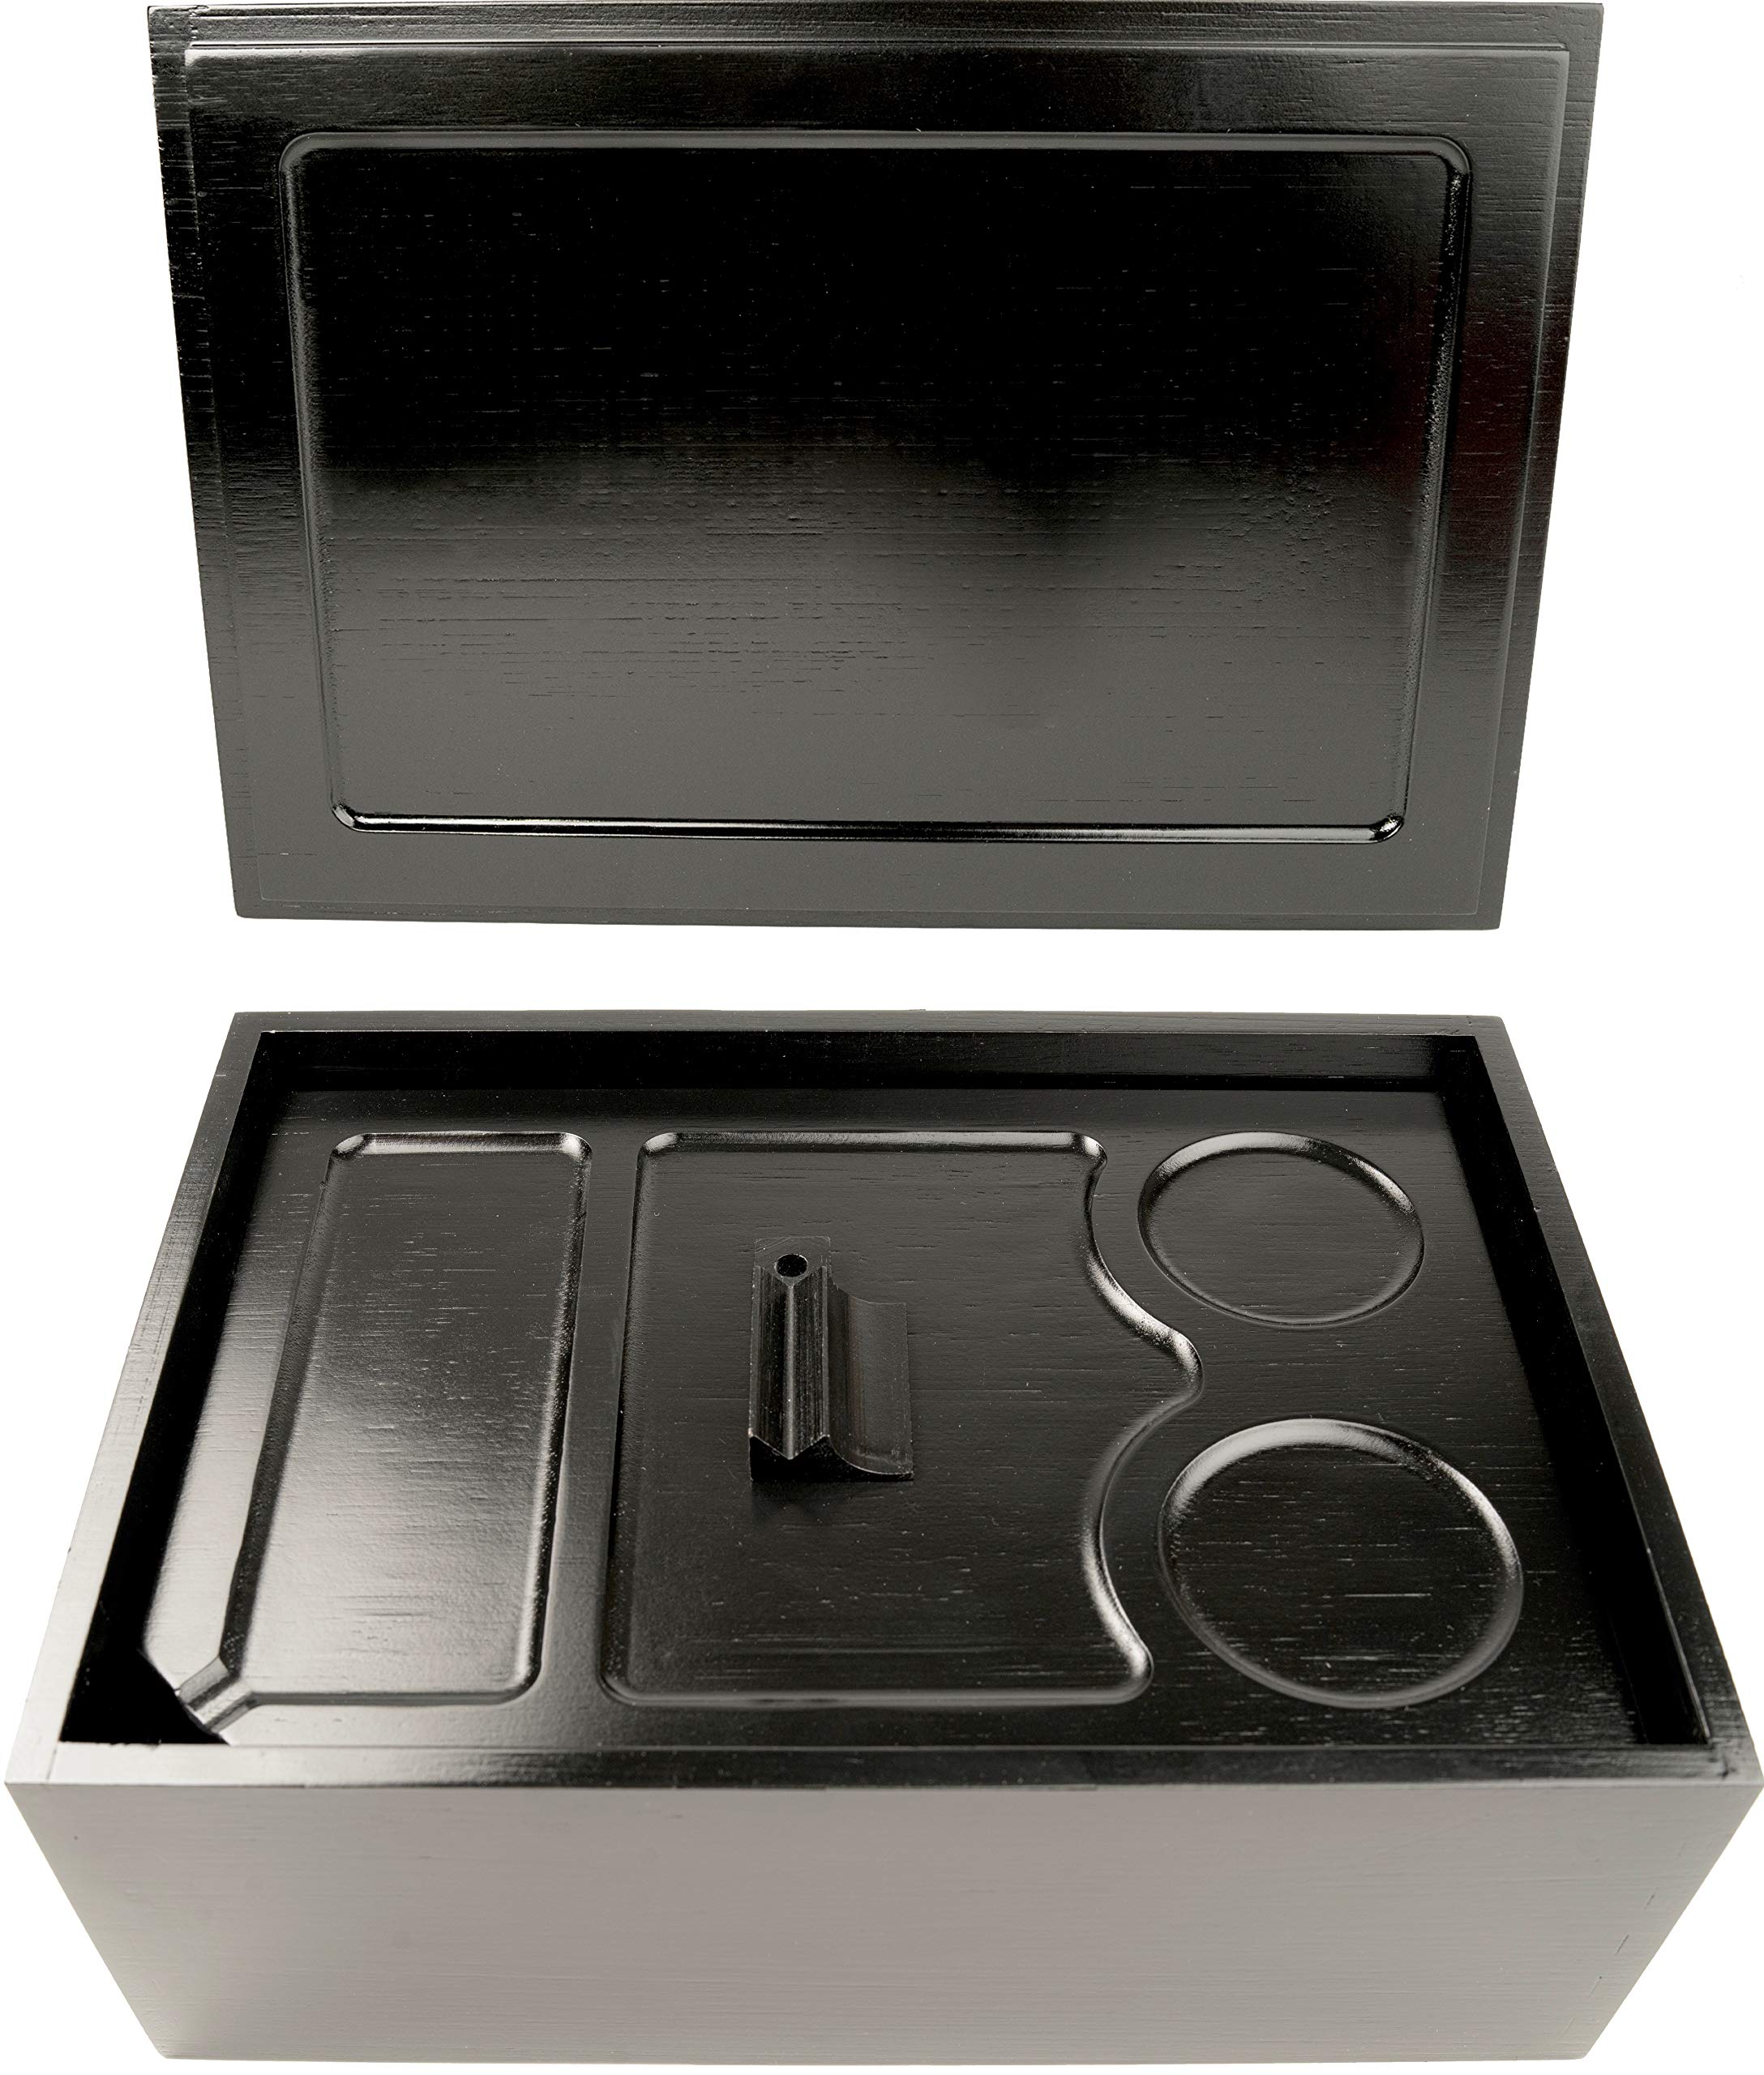 Wooden Storage Box with Lid - Wooden Keepsake Boxes - Premium Quality Dovetail Design